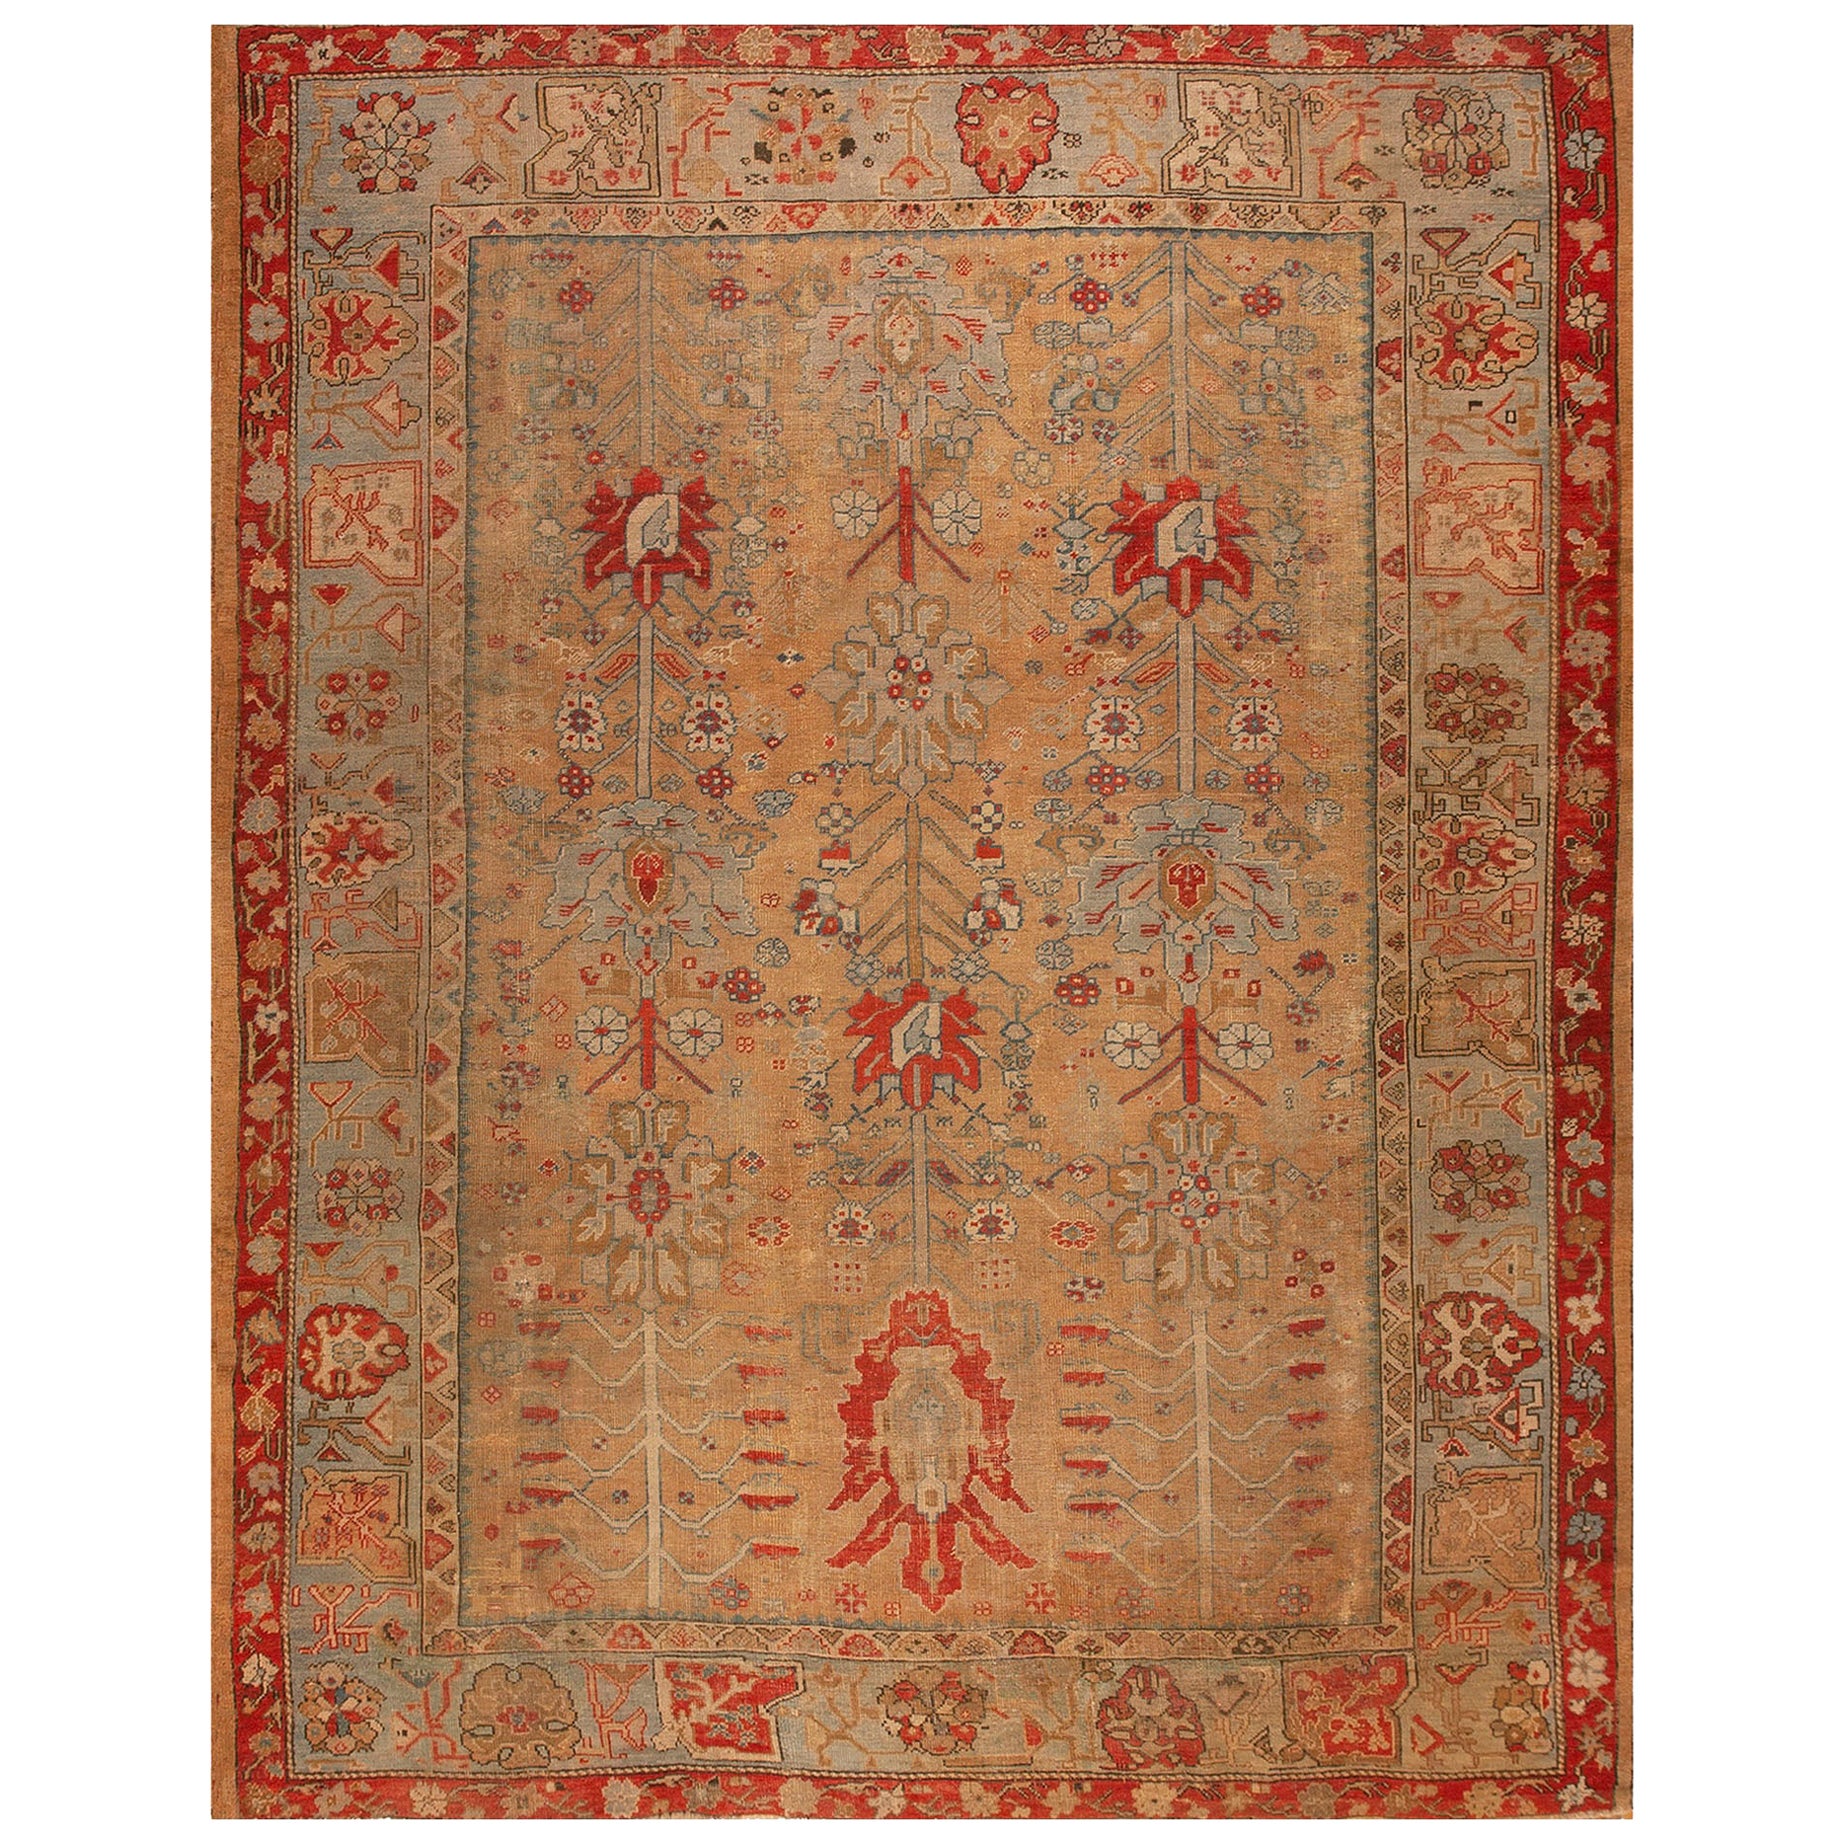 19th Century Turkish Ghiordes Oushak Carpet ( 9'2" x 11'4" - 280 x 345 ) For Sale